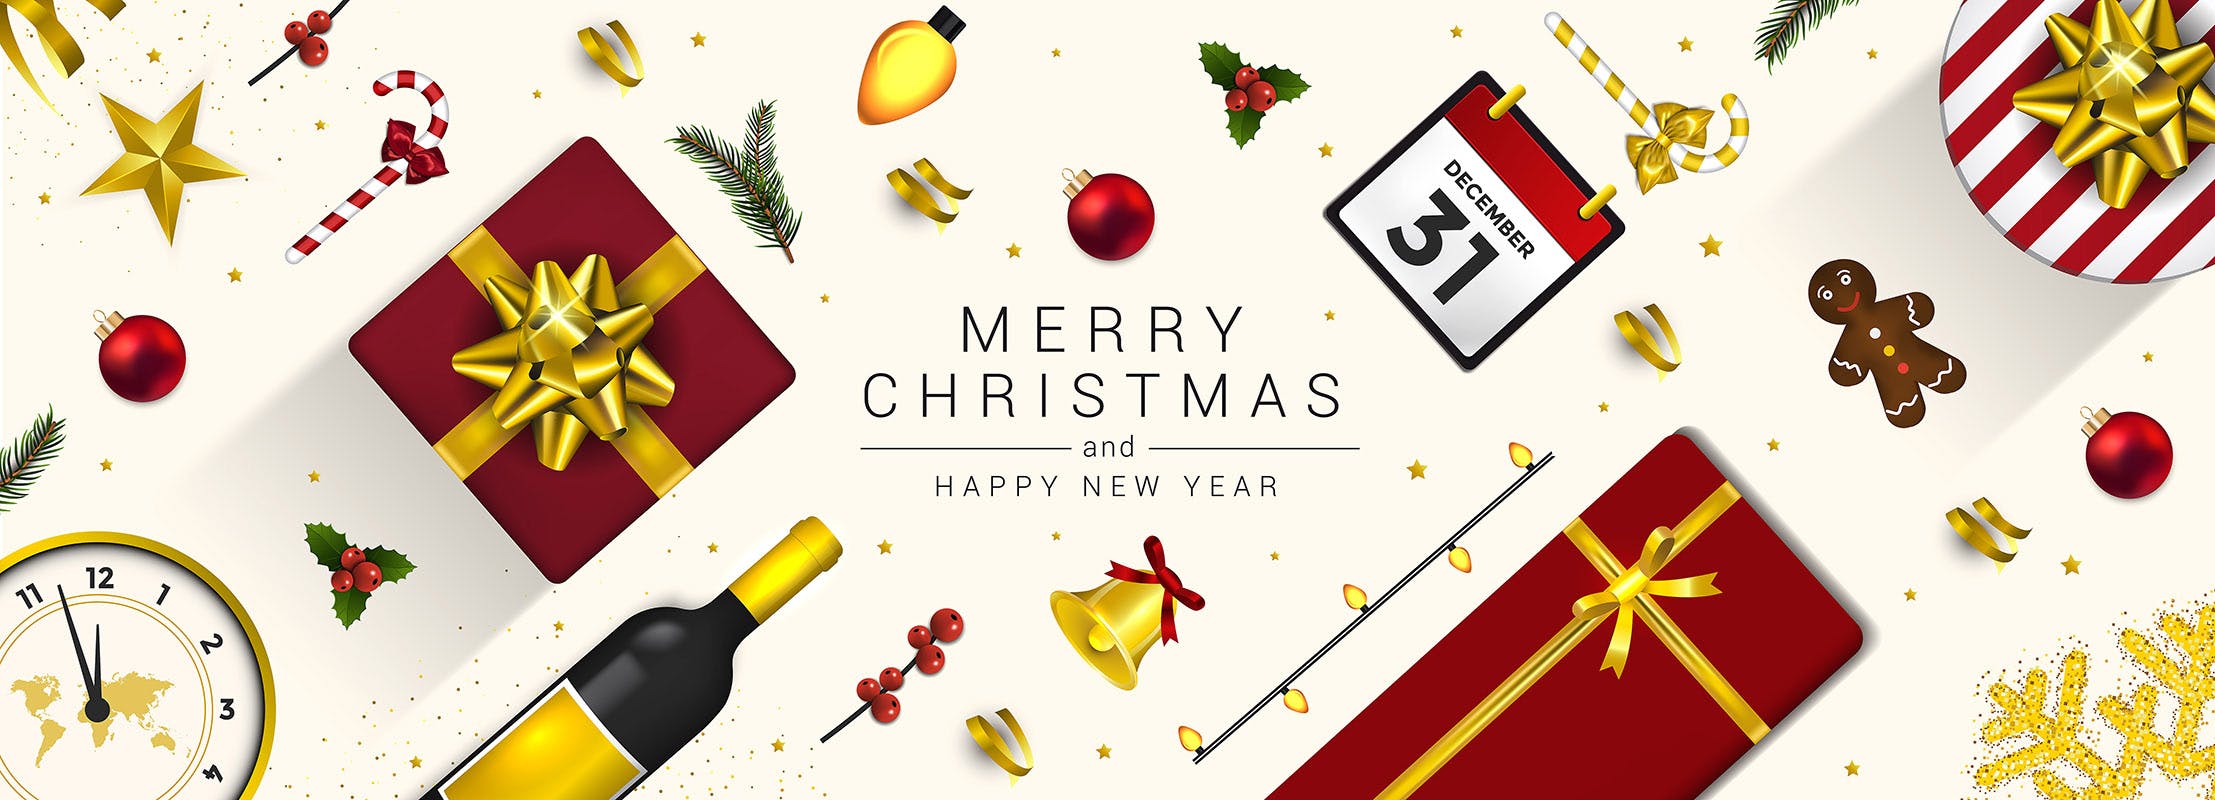 圣诞节/新年祝福主题贺卡设计模板v1 Merry Christmas and Happy New Year greeting cards插图(9)